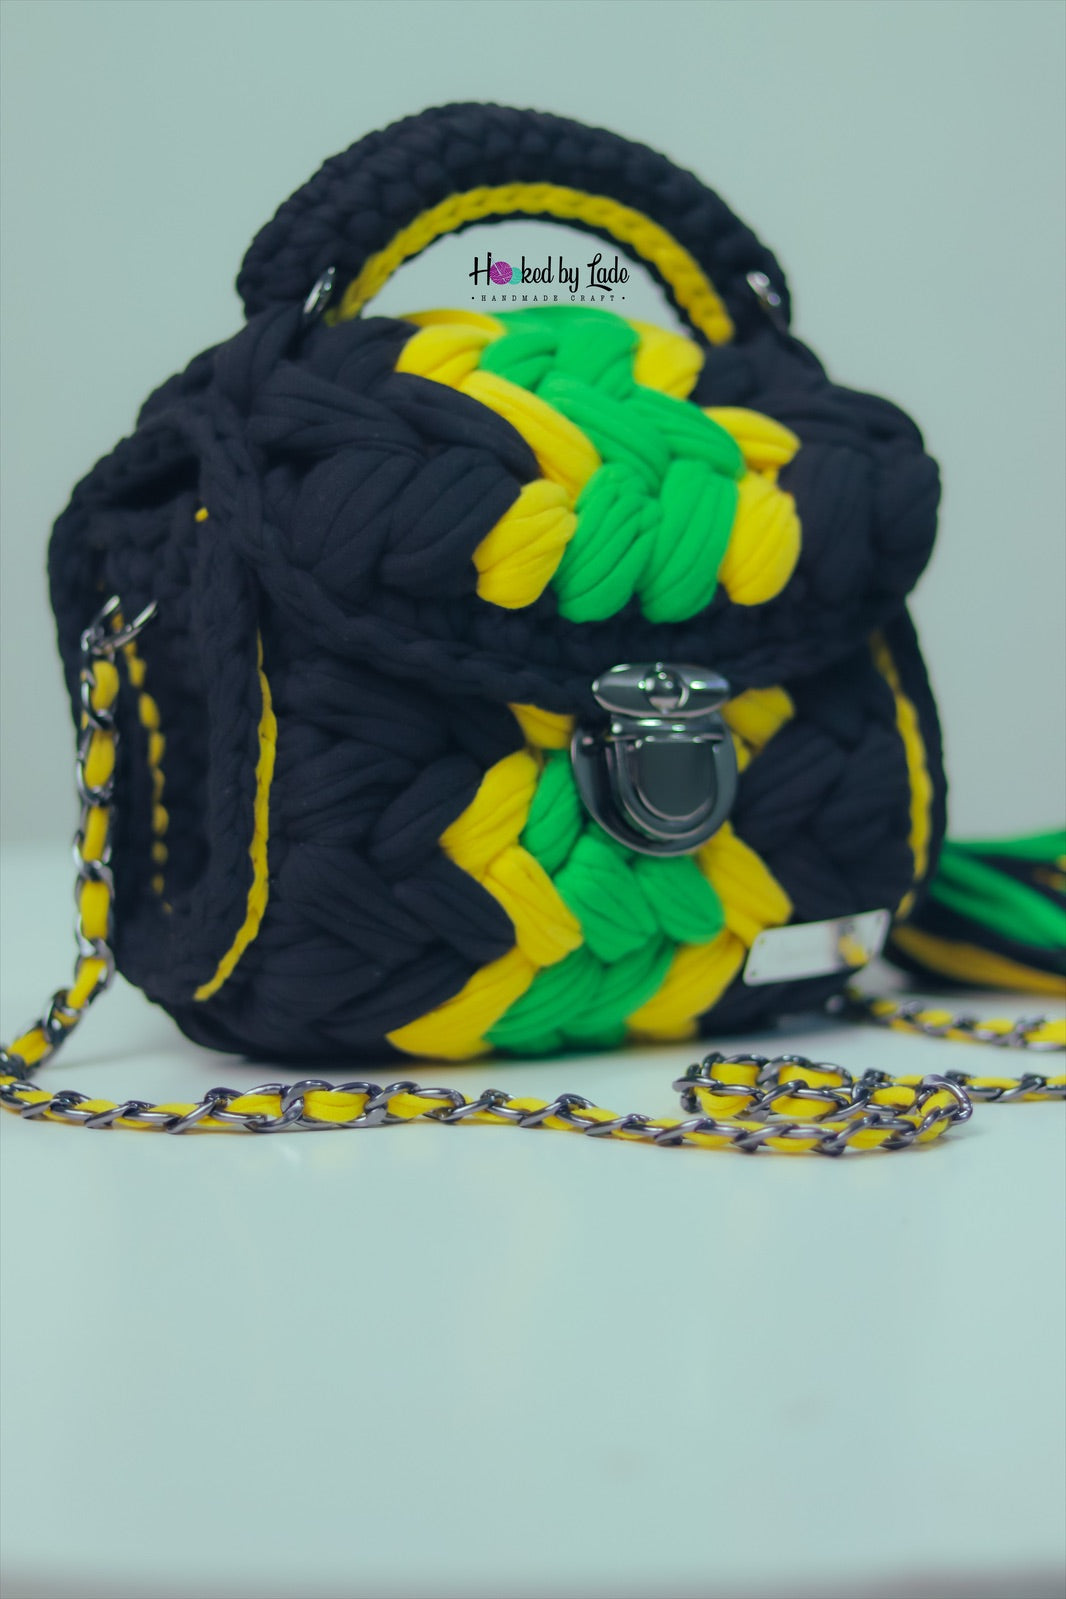 Jamaican flag themed ‘Comfort’ Crochet bag